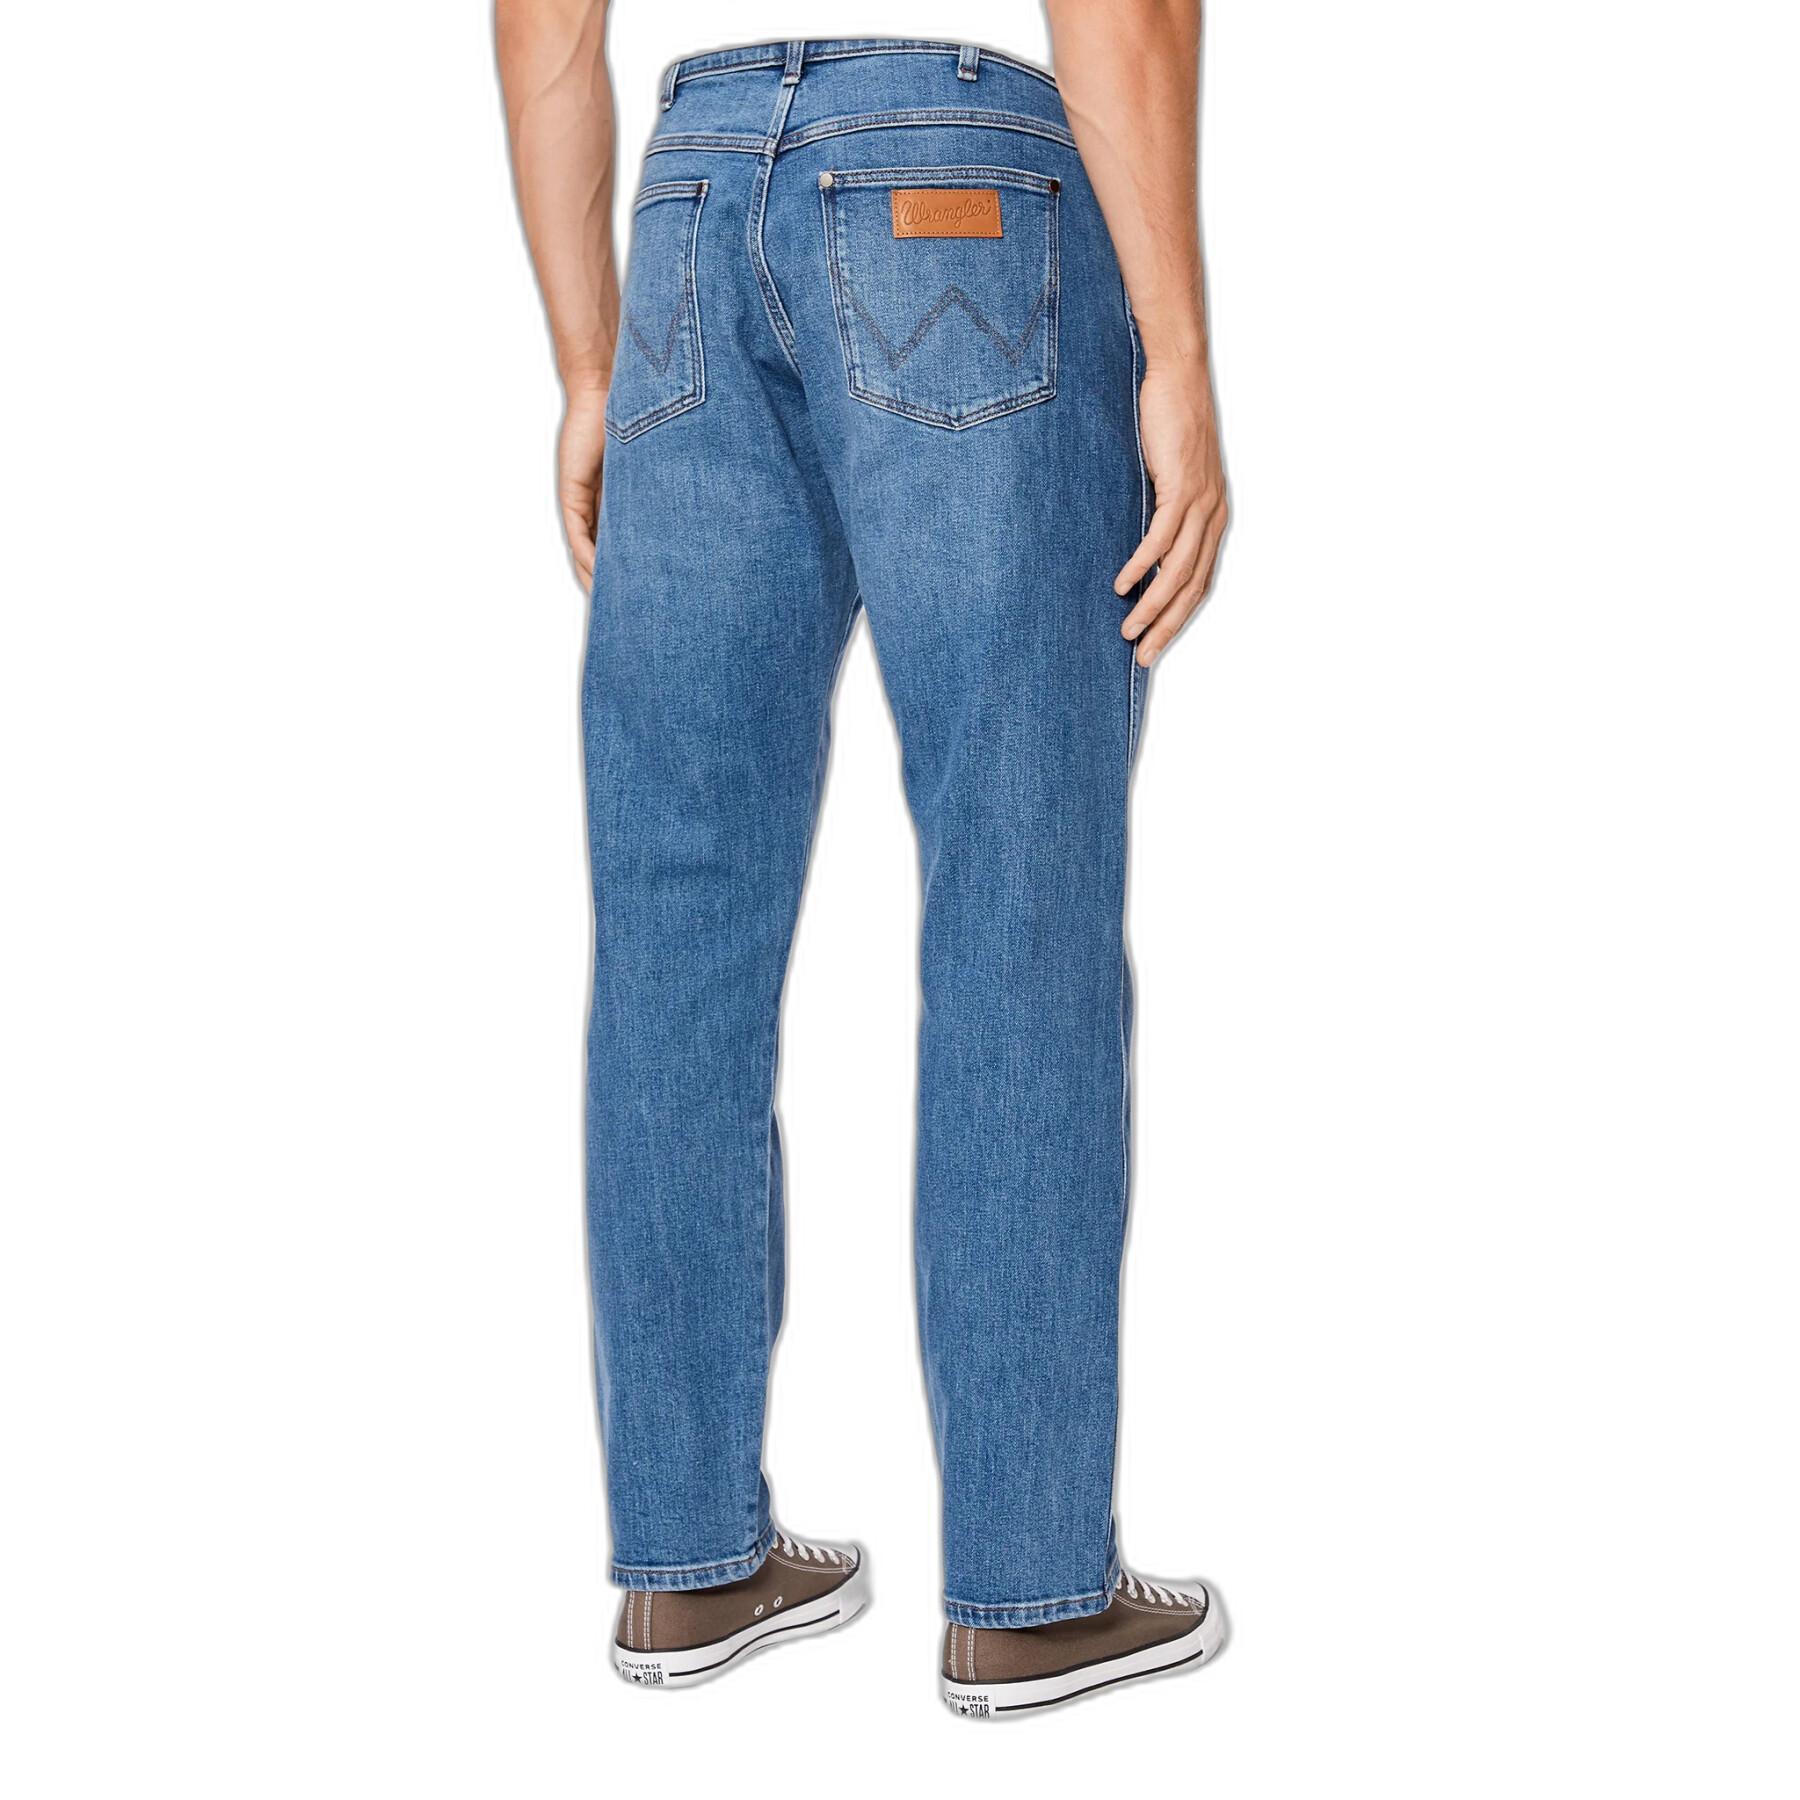 New jeans Wrangler Frontier Favorite